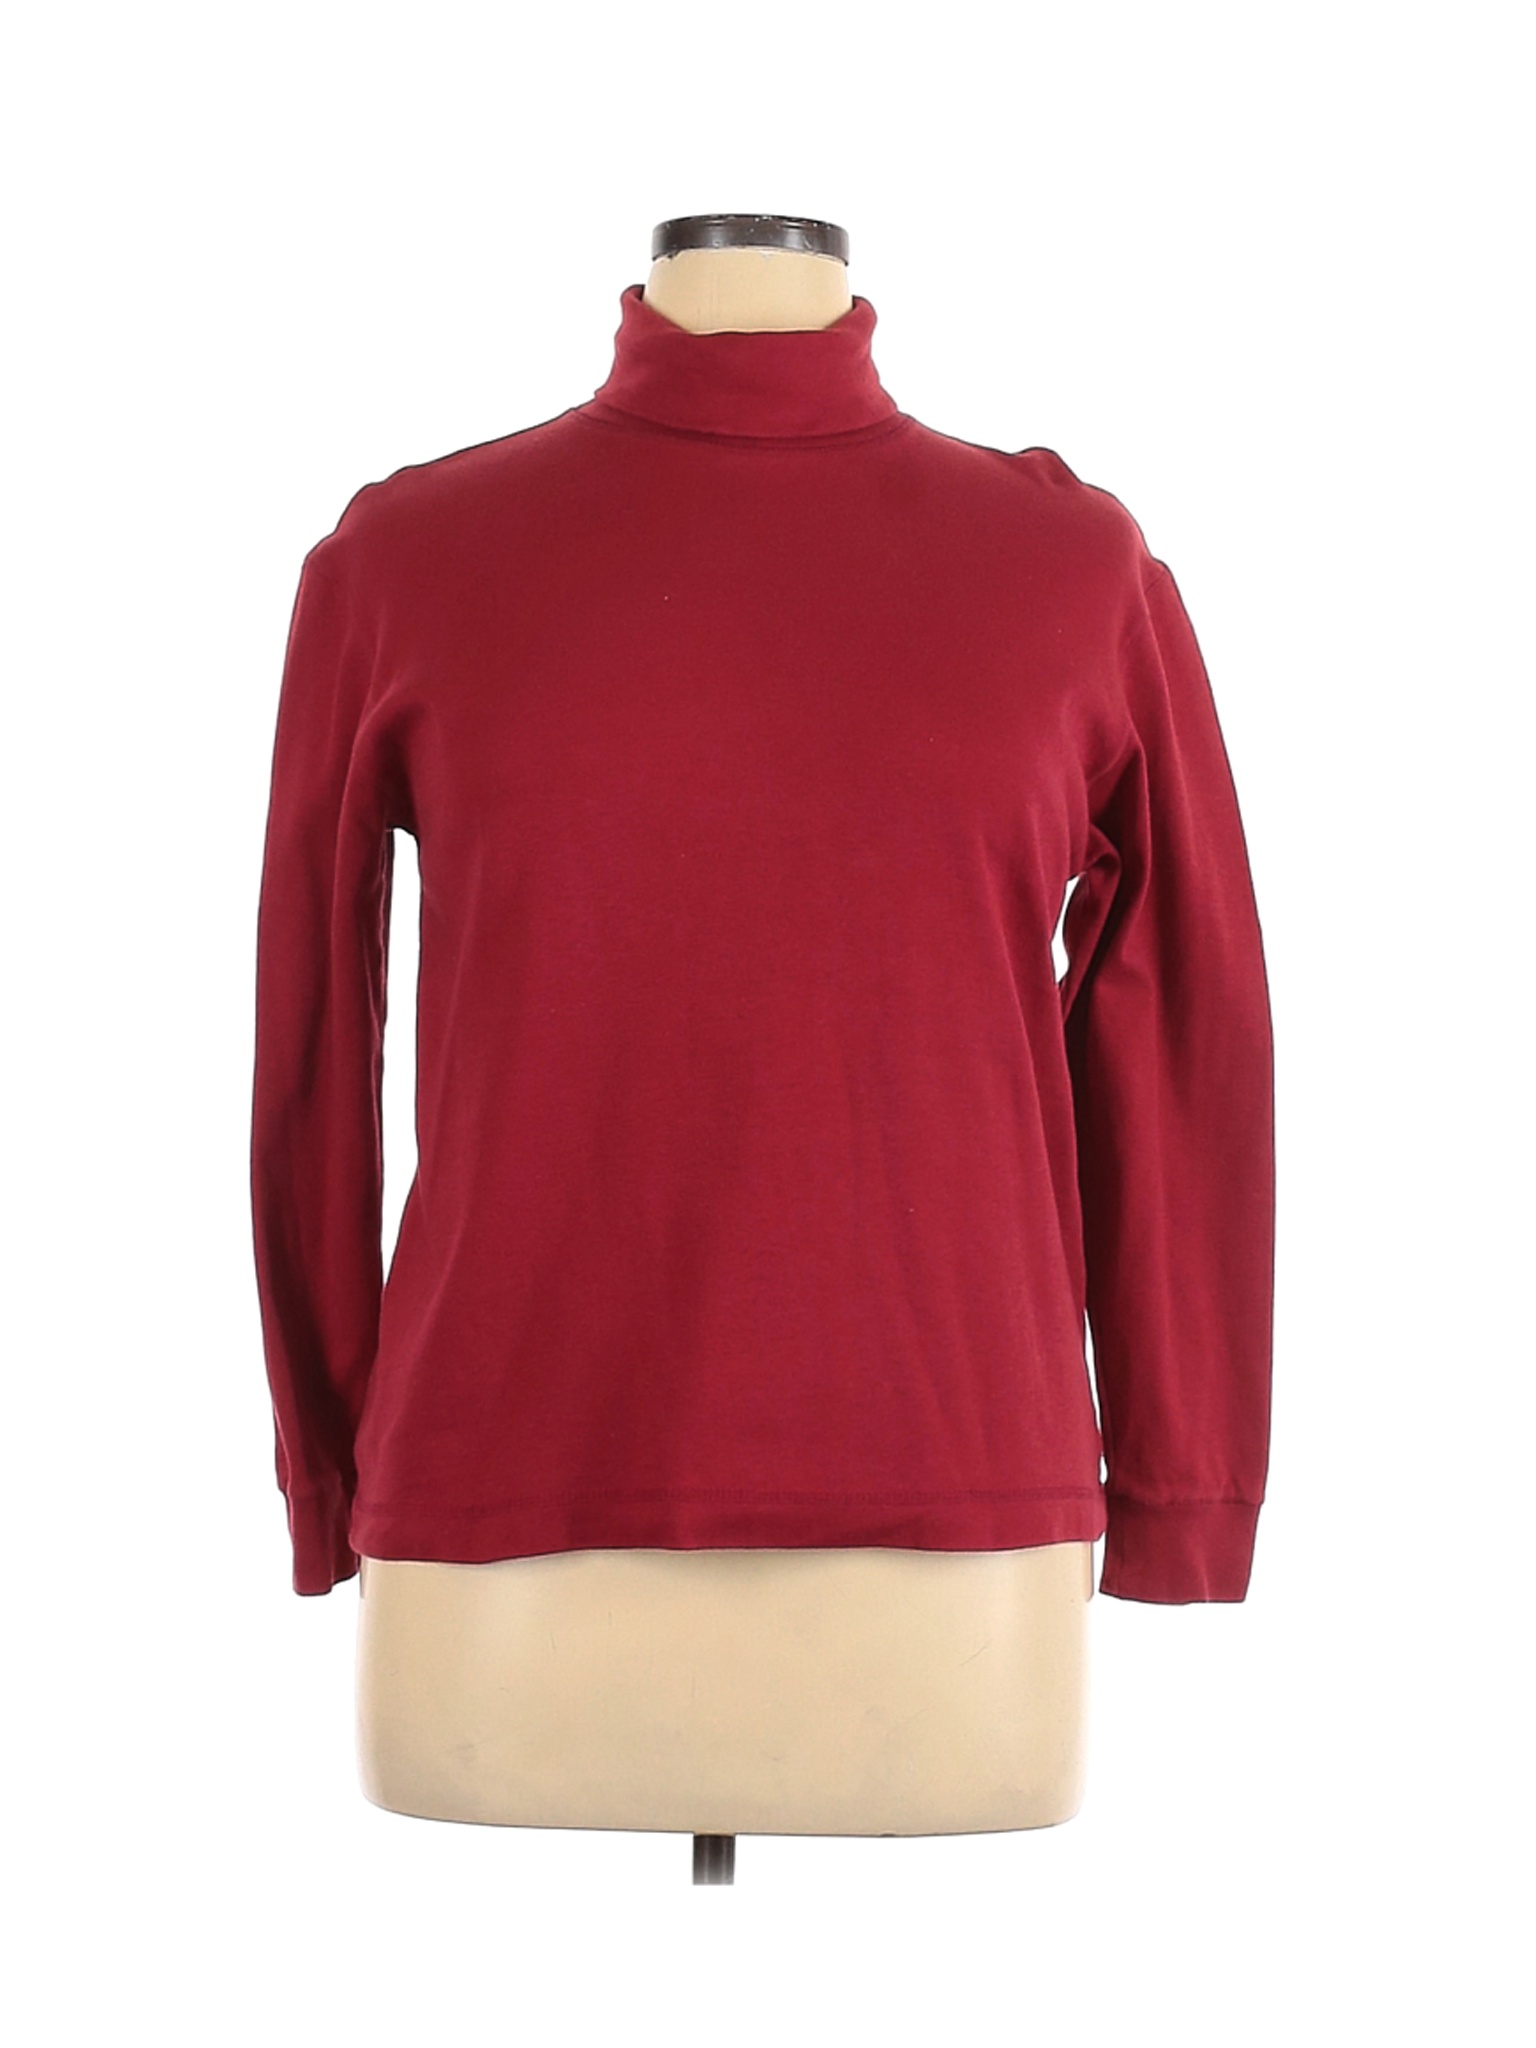 Assorted Brands Women Red Long Sleeve Turtleneck 10 | eBay